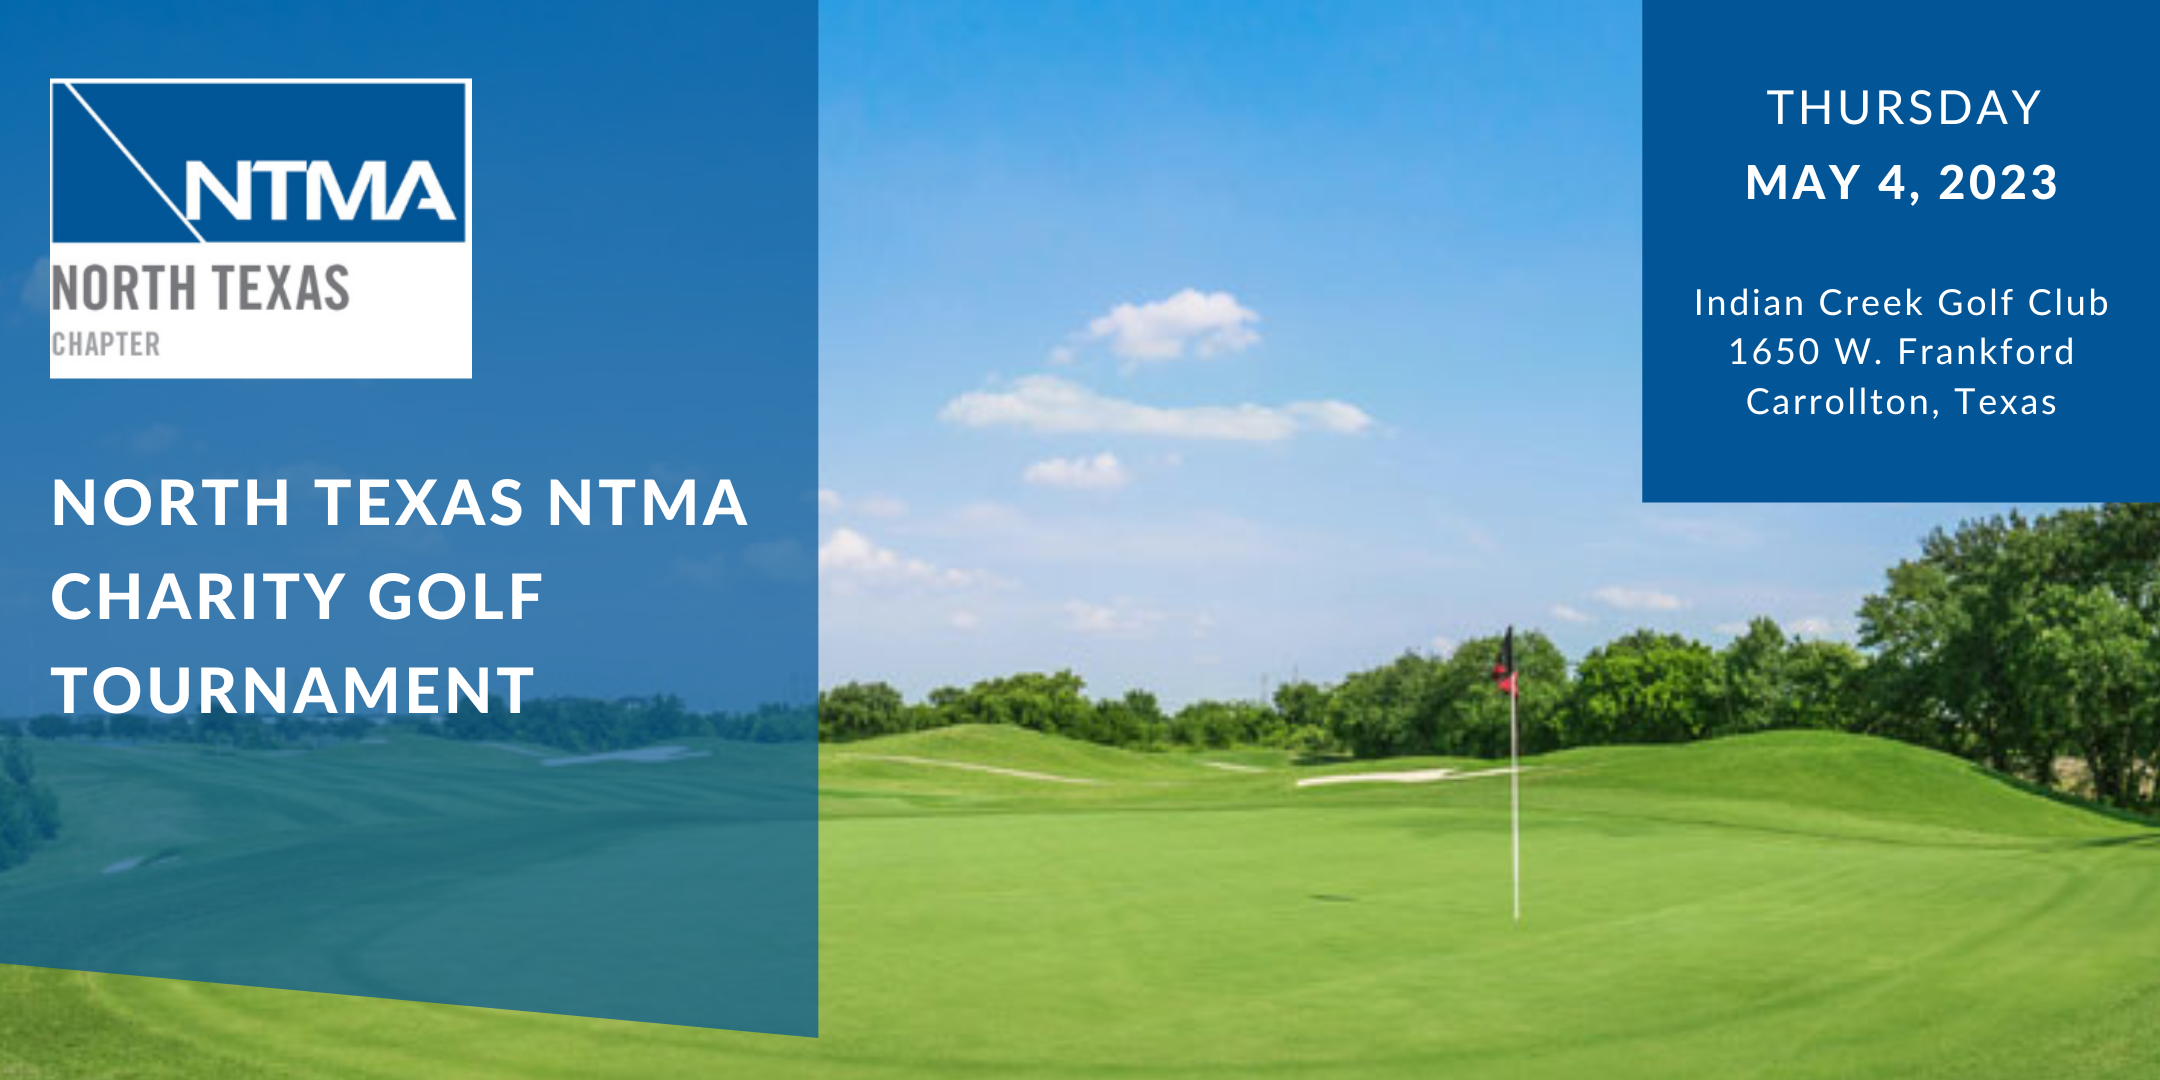 North Texas NTMA Charity Golf Tournament